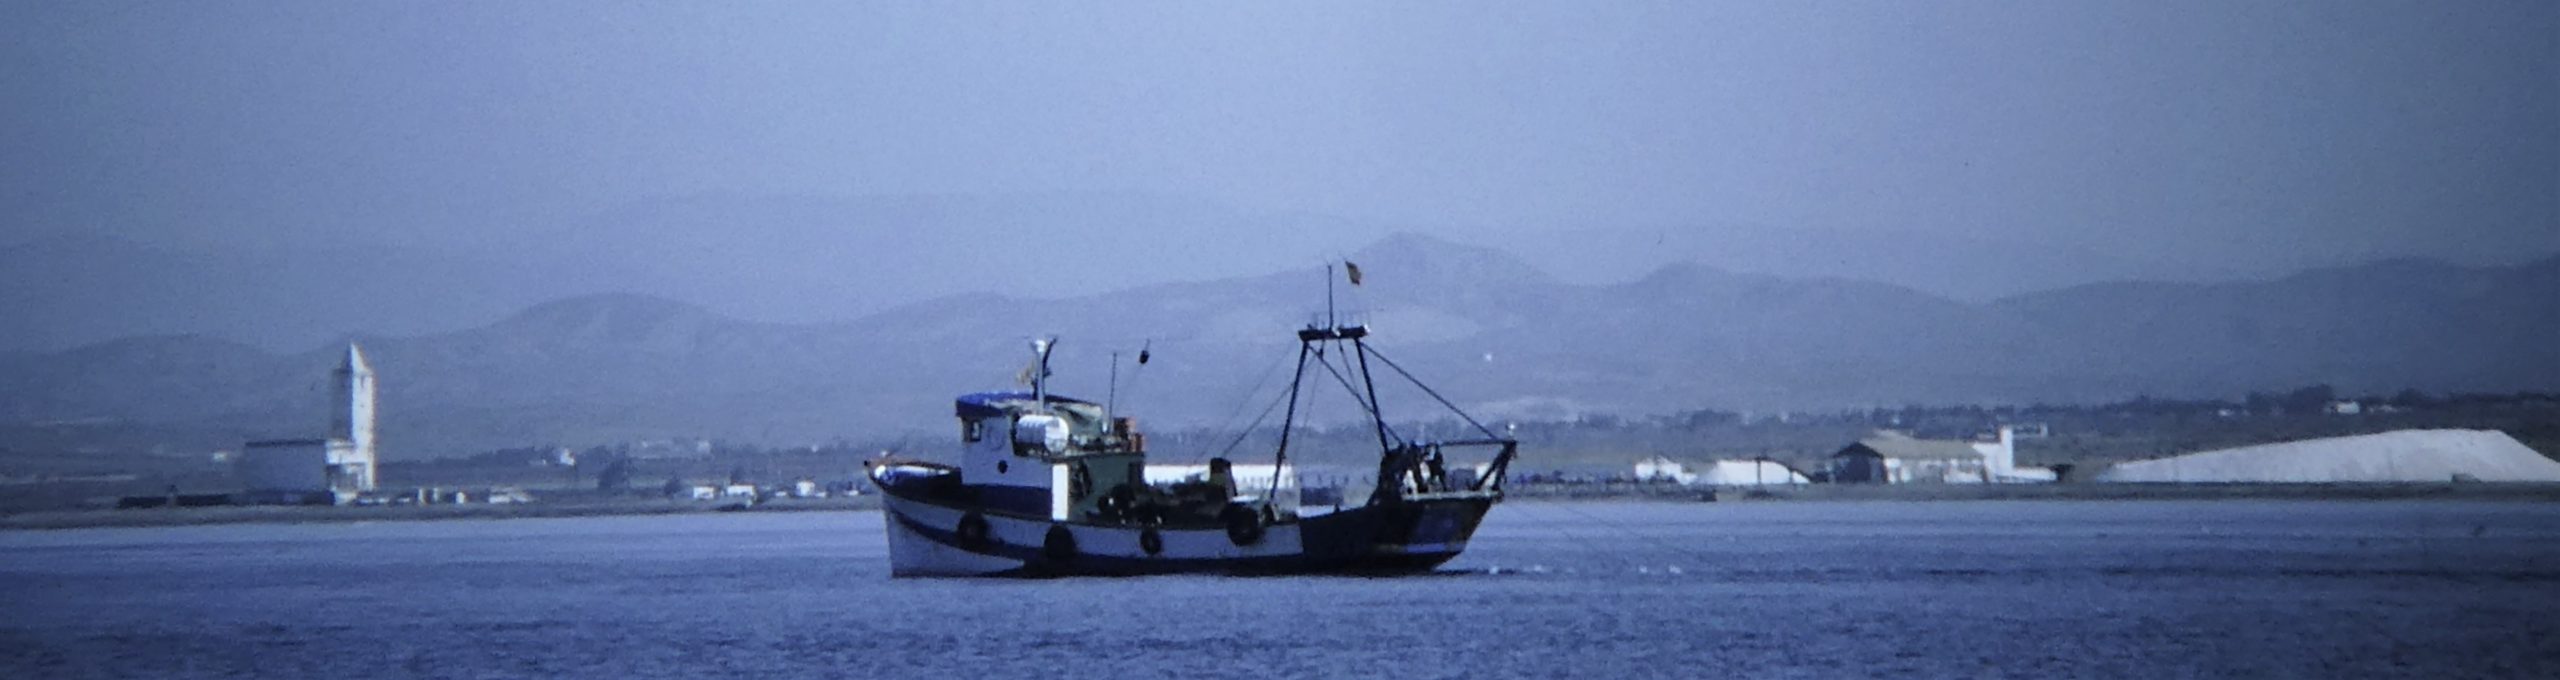 Saltwater fishing – SoCal Swordfish bagged on tiny custom boat